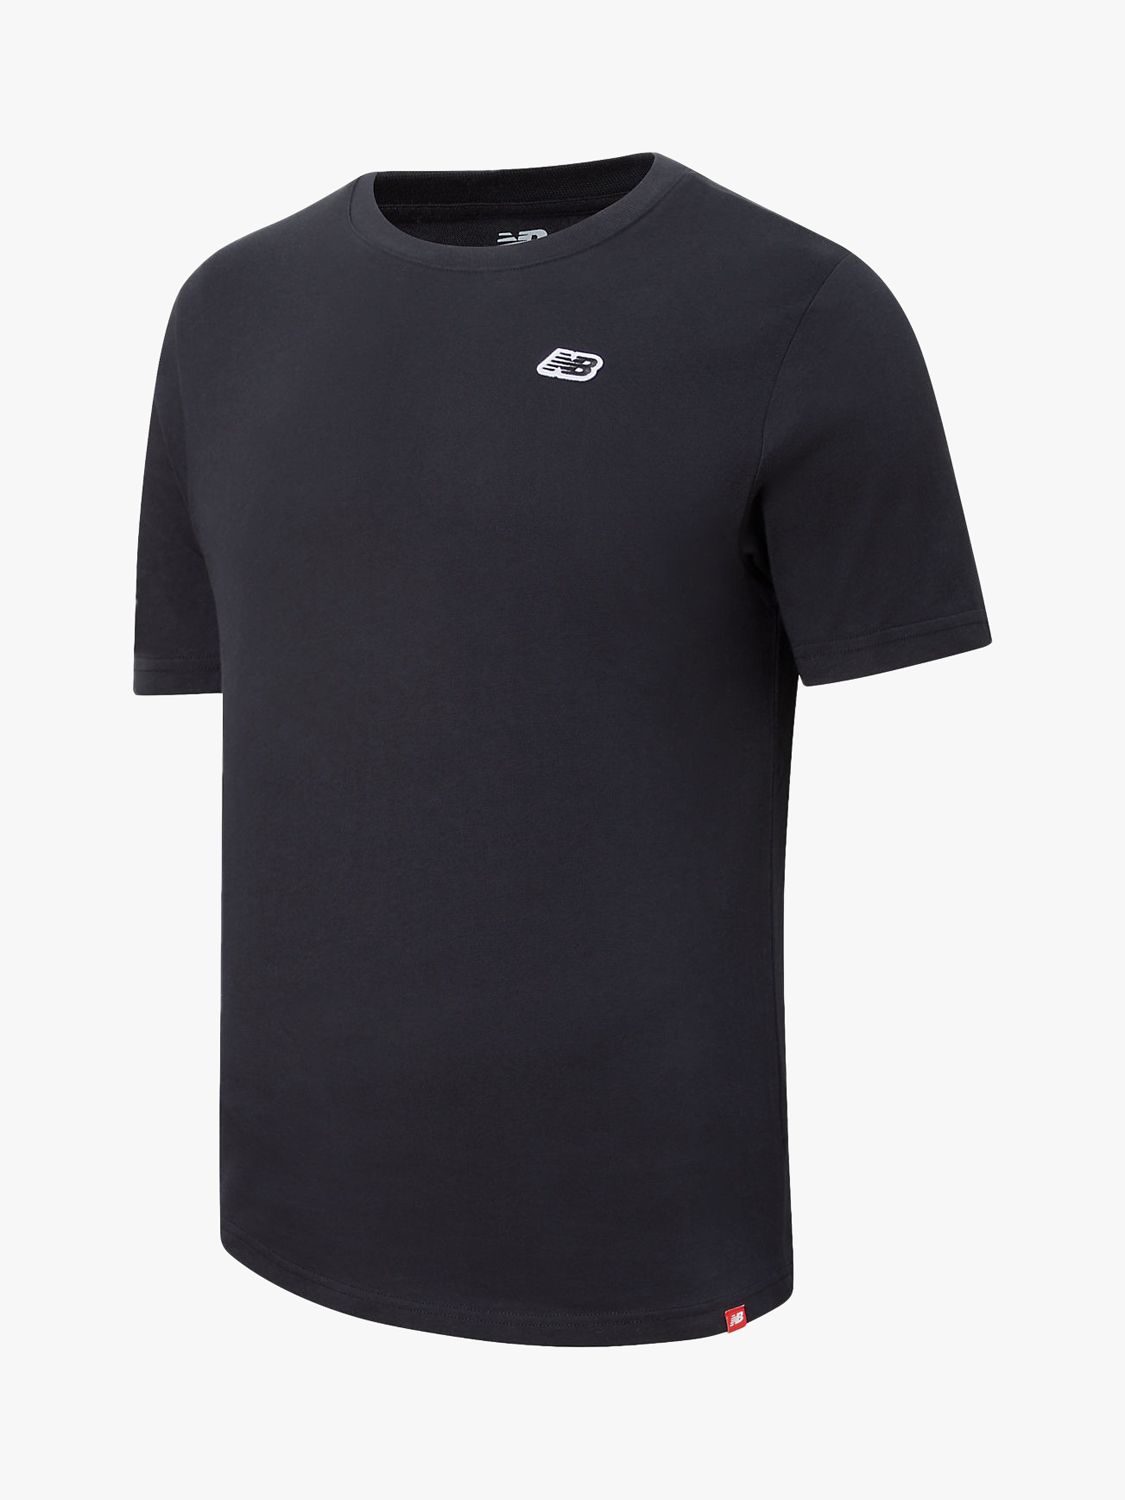 New Balance Men's Small Logo T-Shirt, Black at John Lewis & Partners